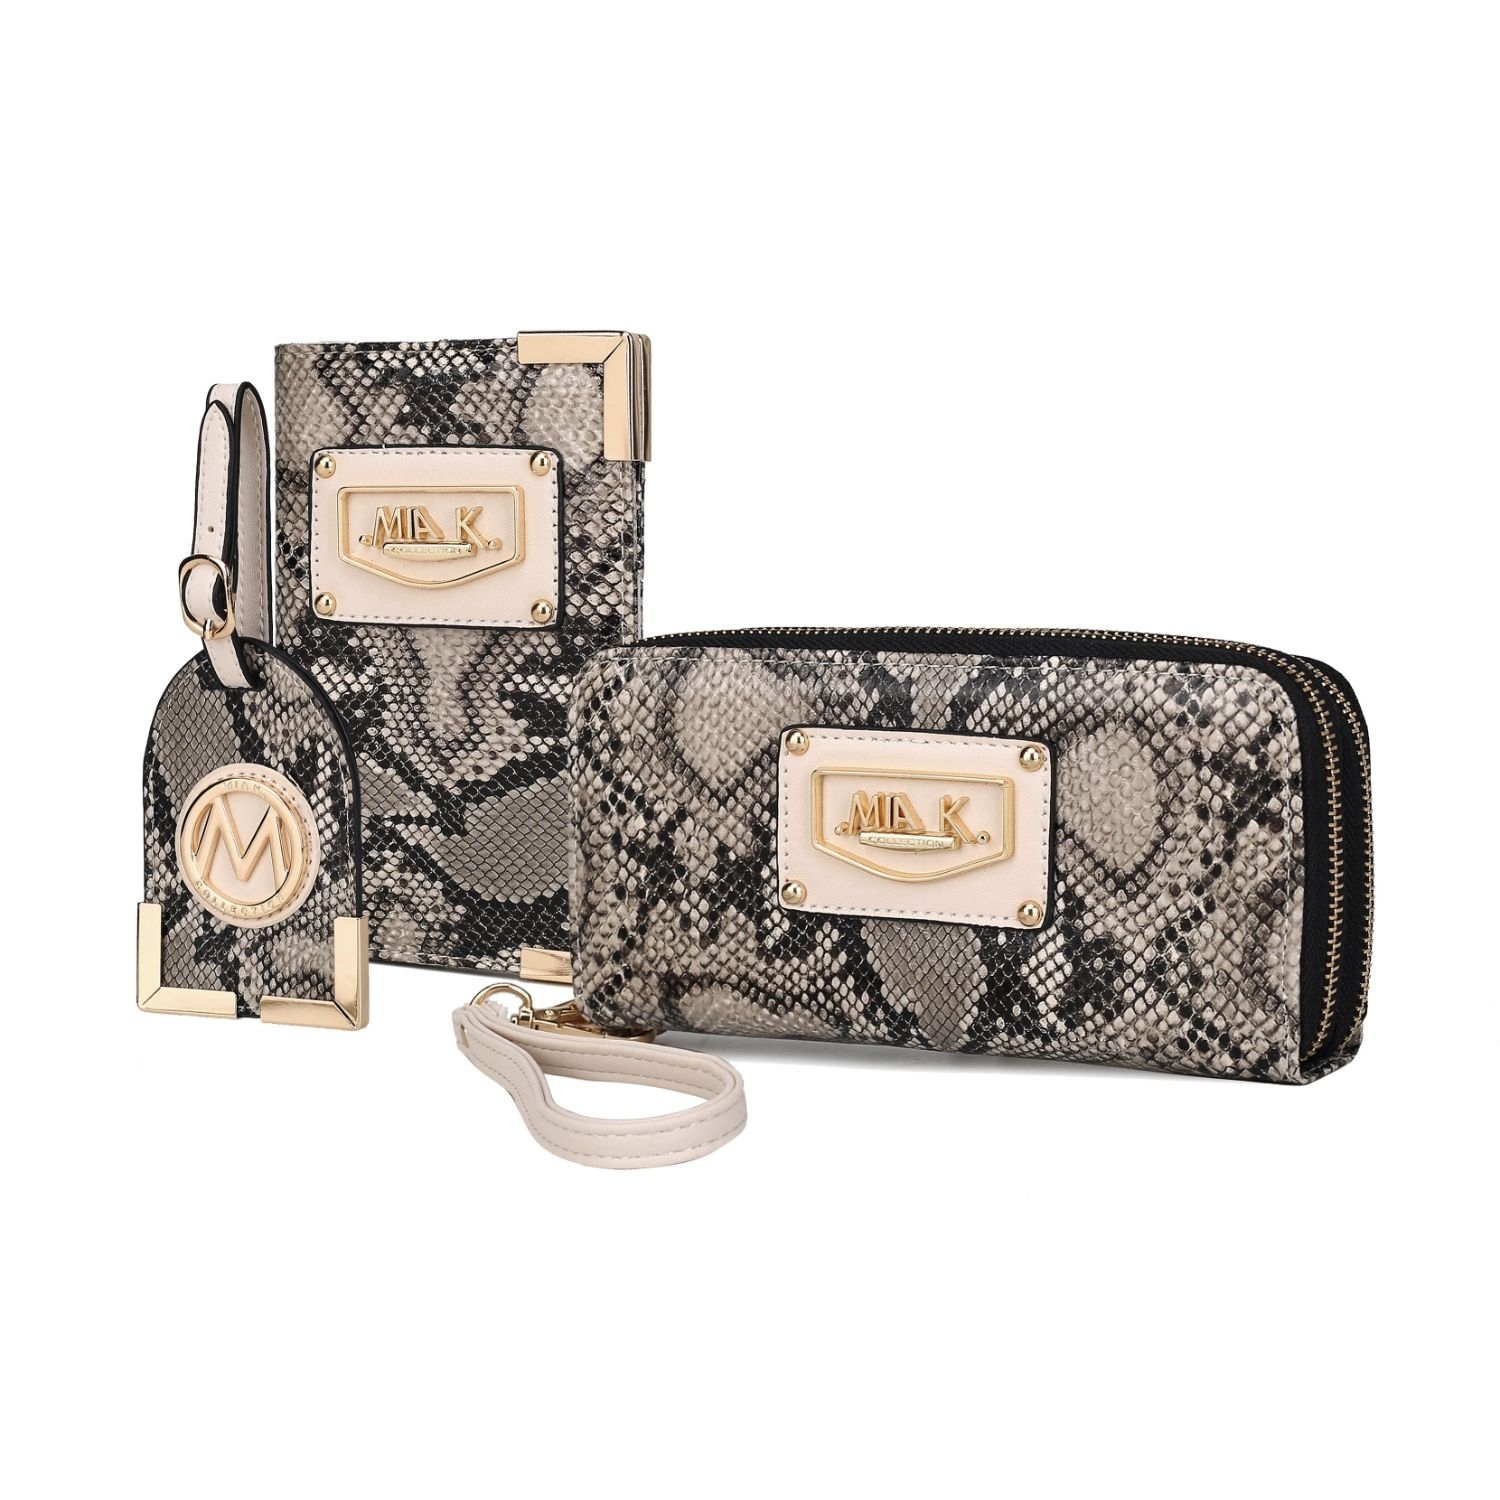 MKF Collection Darla Snake Travel Gift Set Handbag By Mia K 3 Pieces - Light Grey